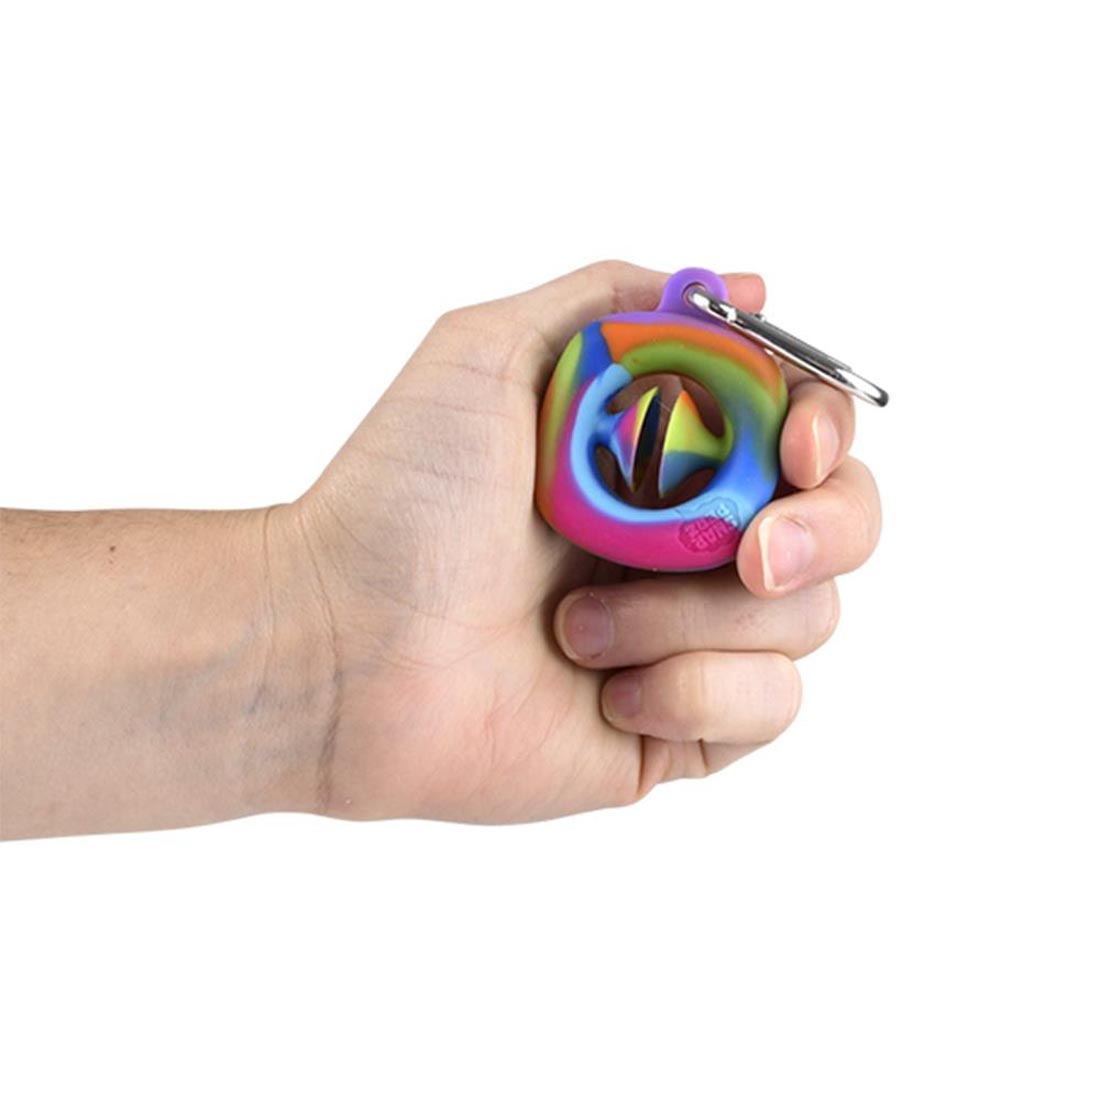 Hand holding a Mini Rainbow Snapperz Fidget Toy